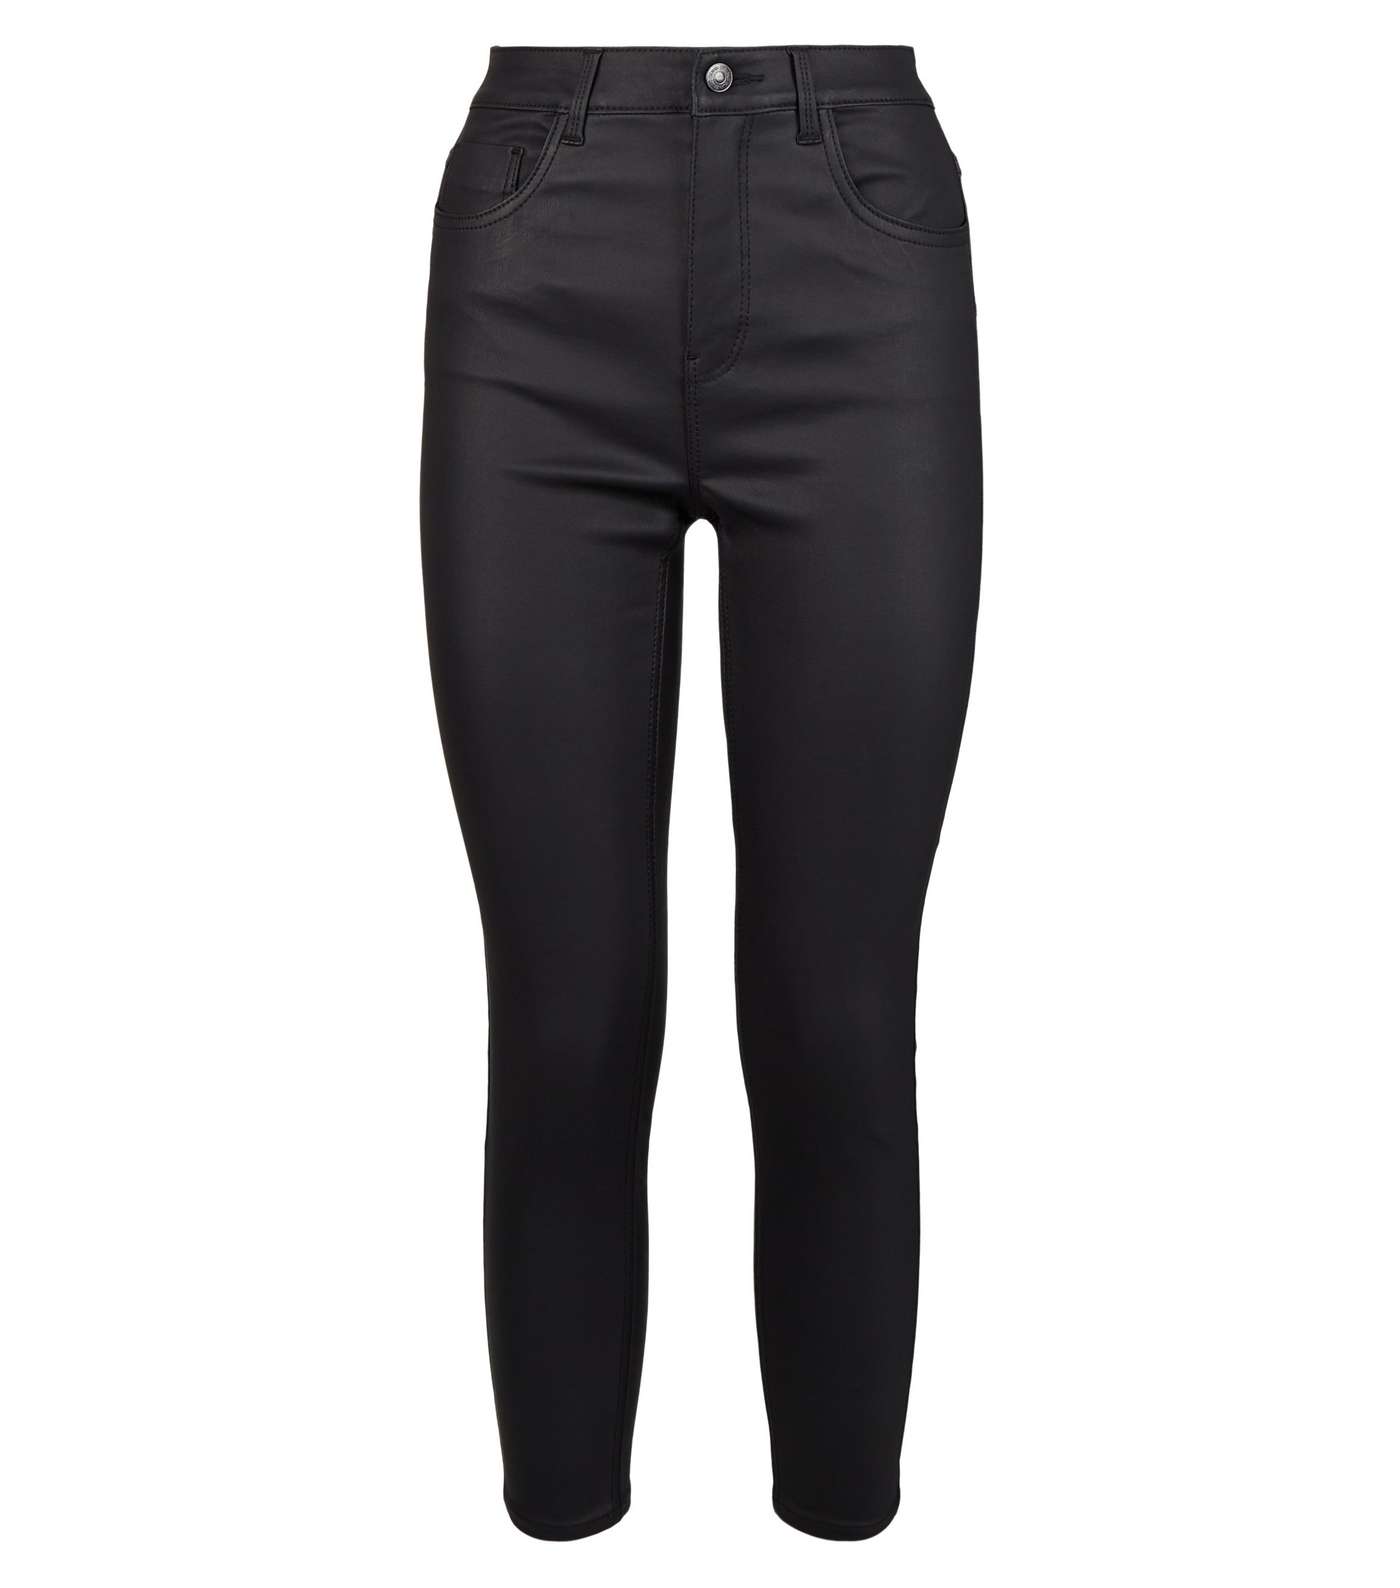 Petite Black Coated Leather-Look 'Lift & Shape' Jenna Skinny Jeans Image 5